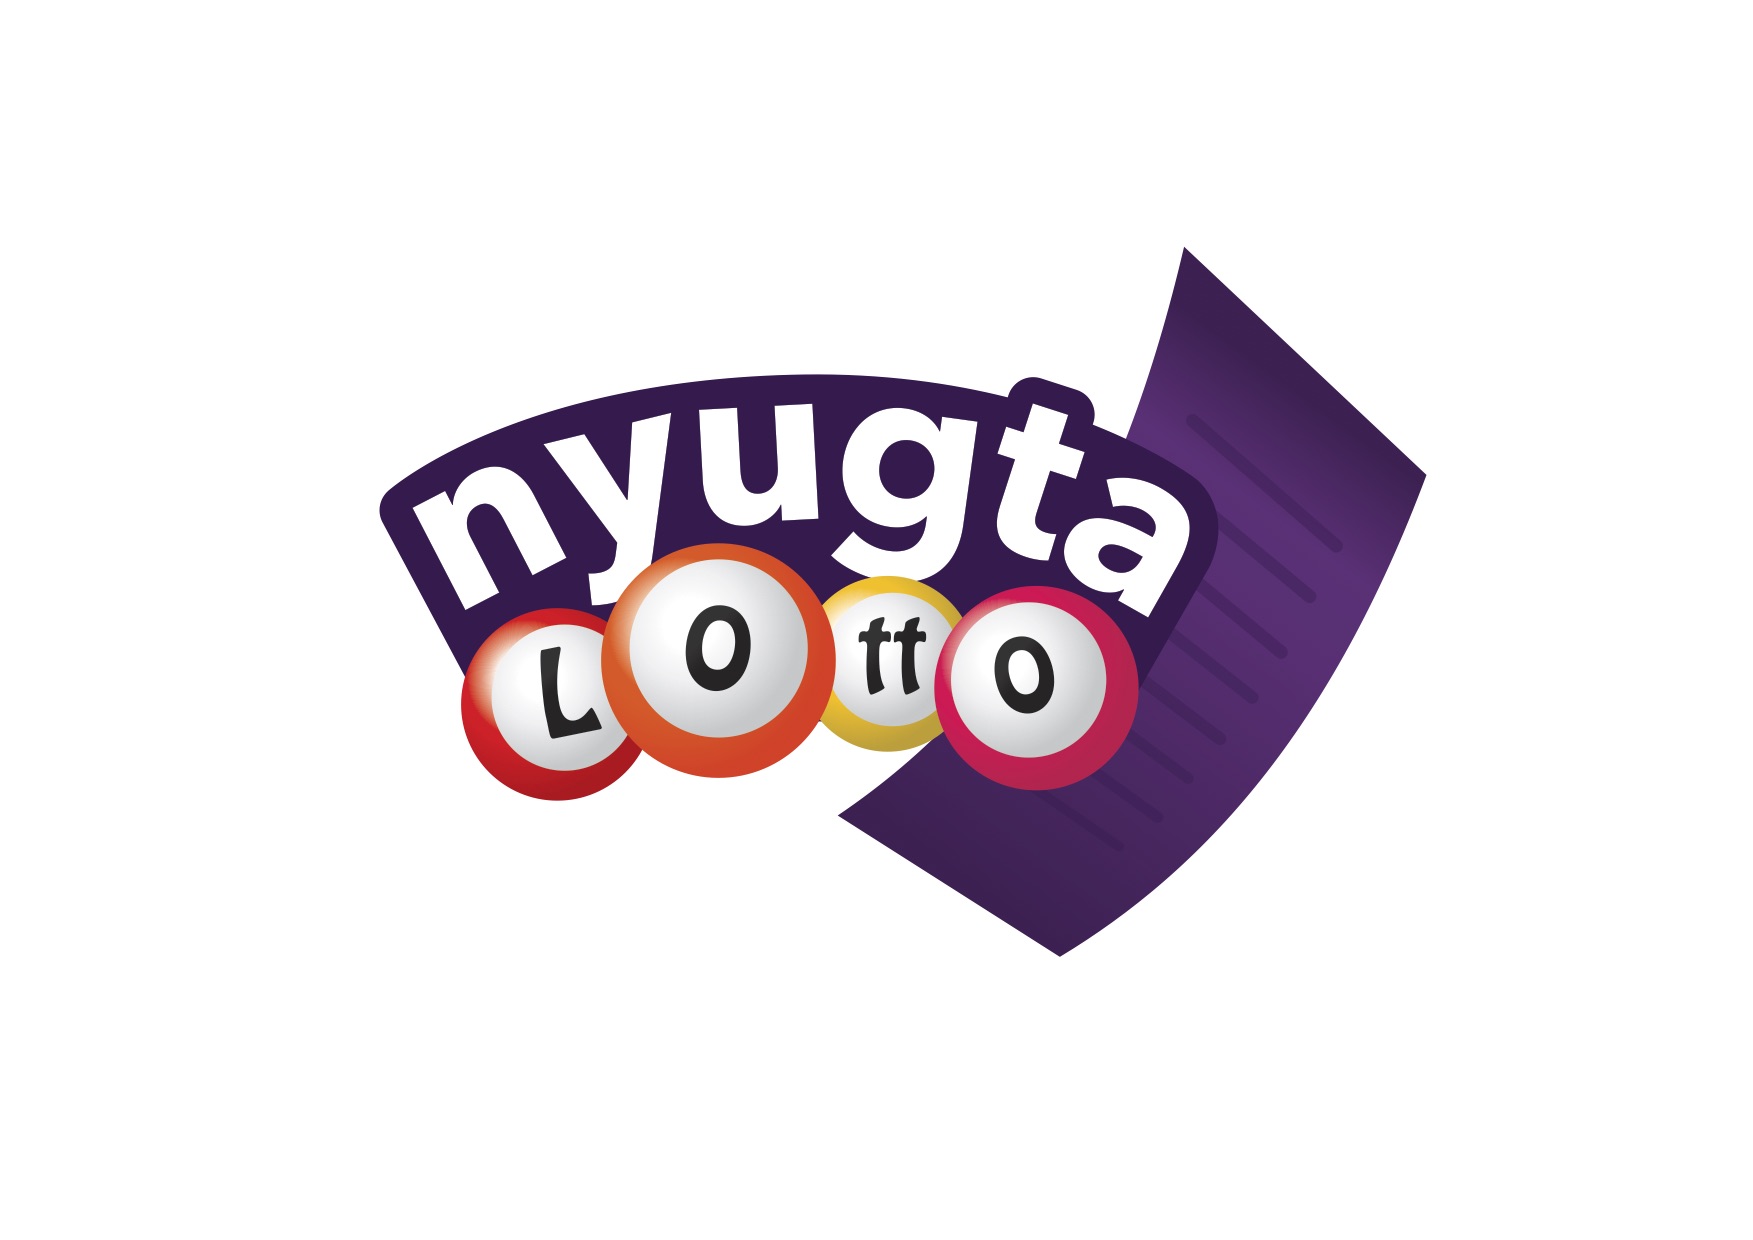 nyugtalotto_logo_1.jpg